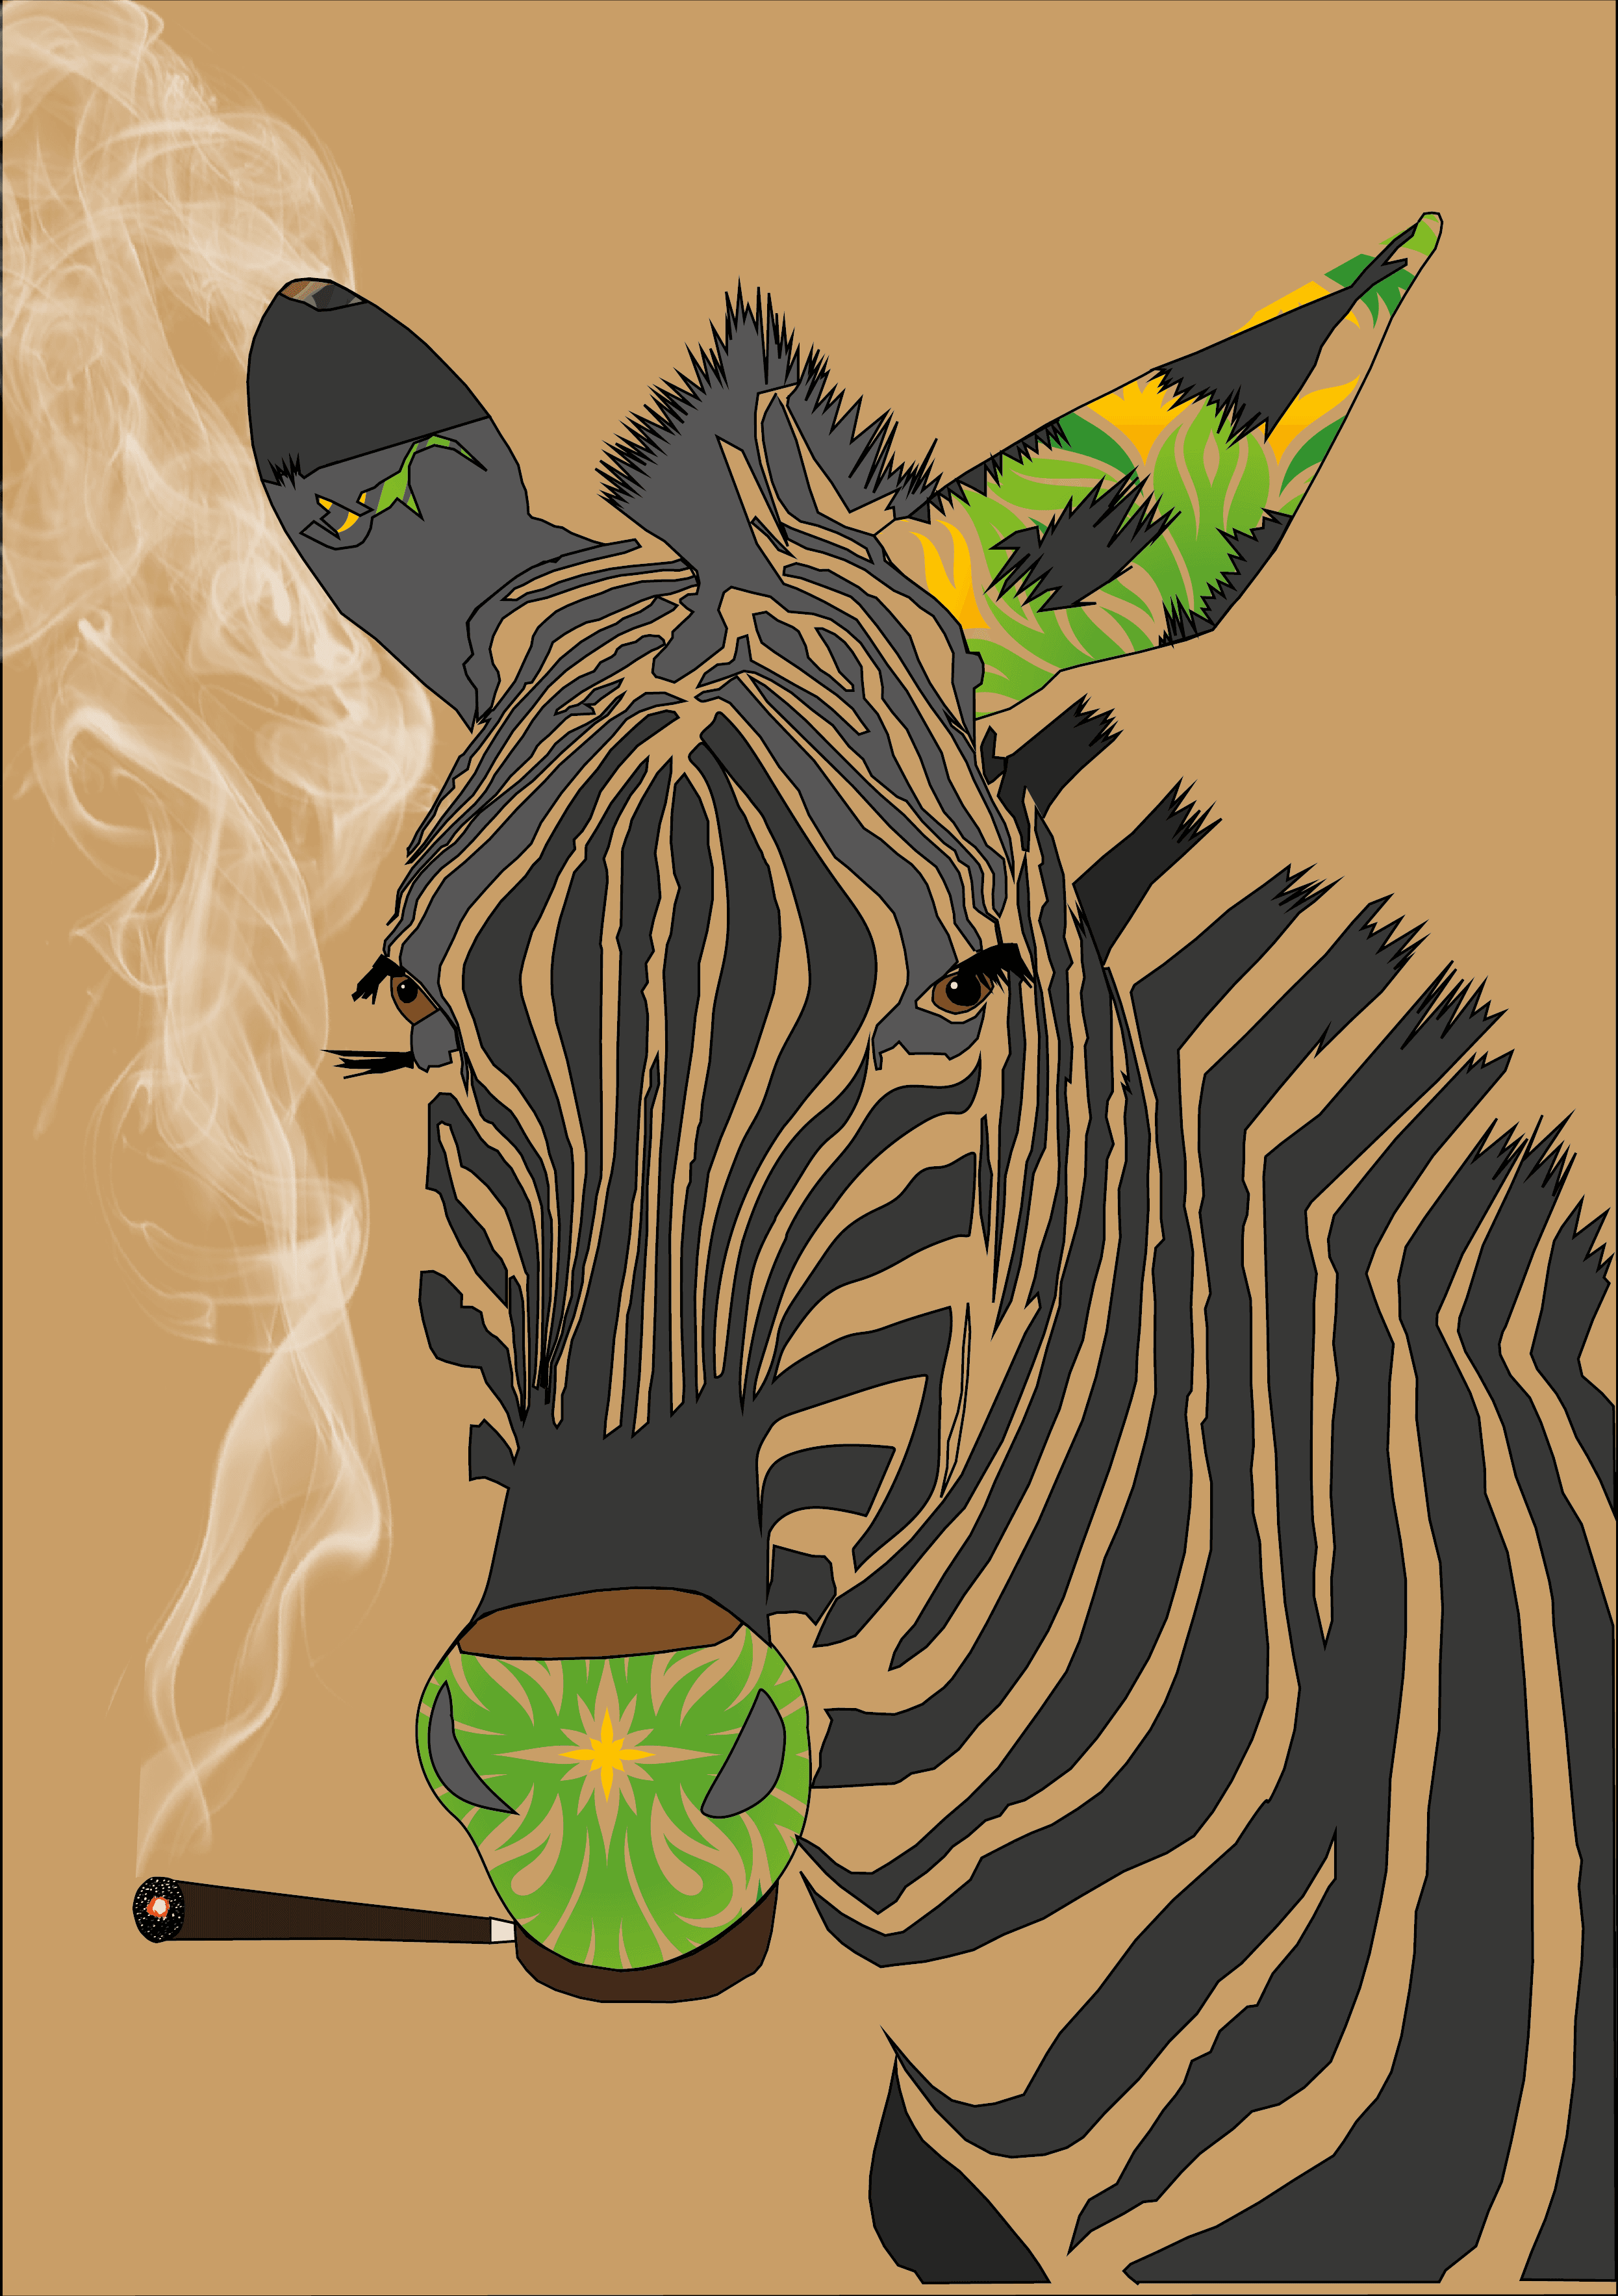 Stoned Zebra #5